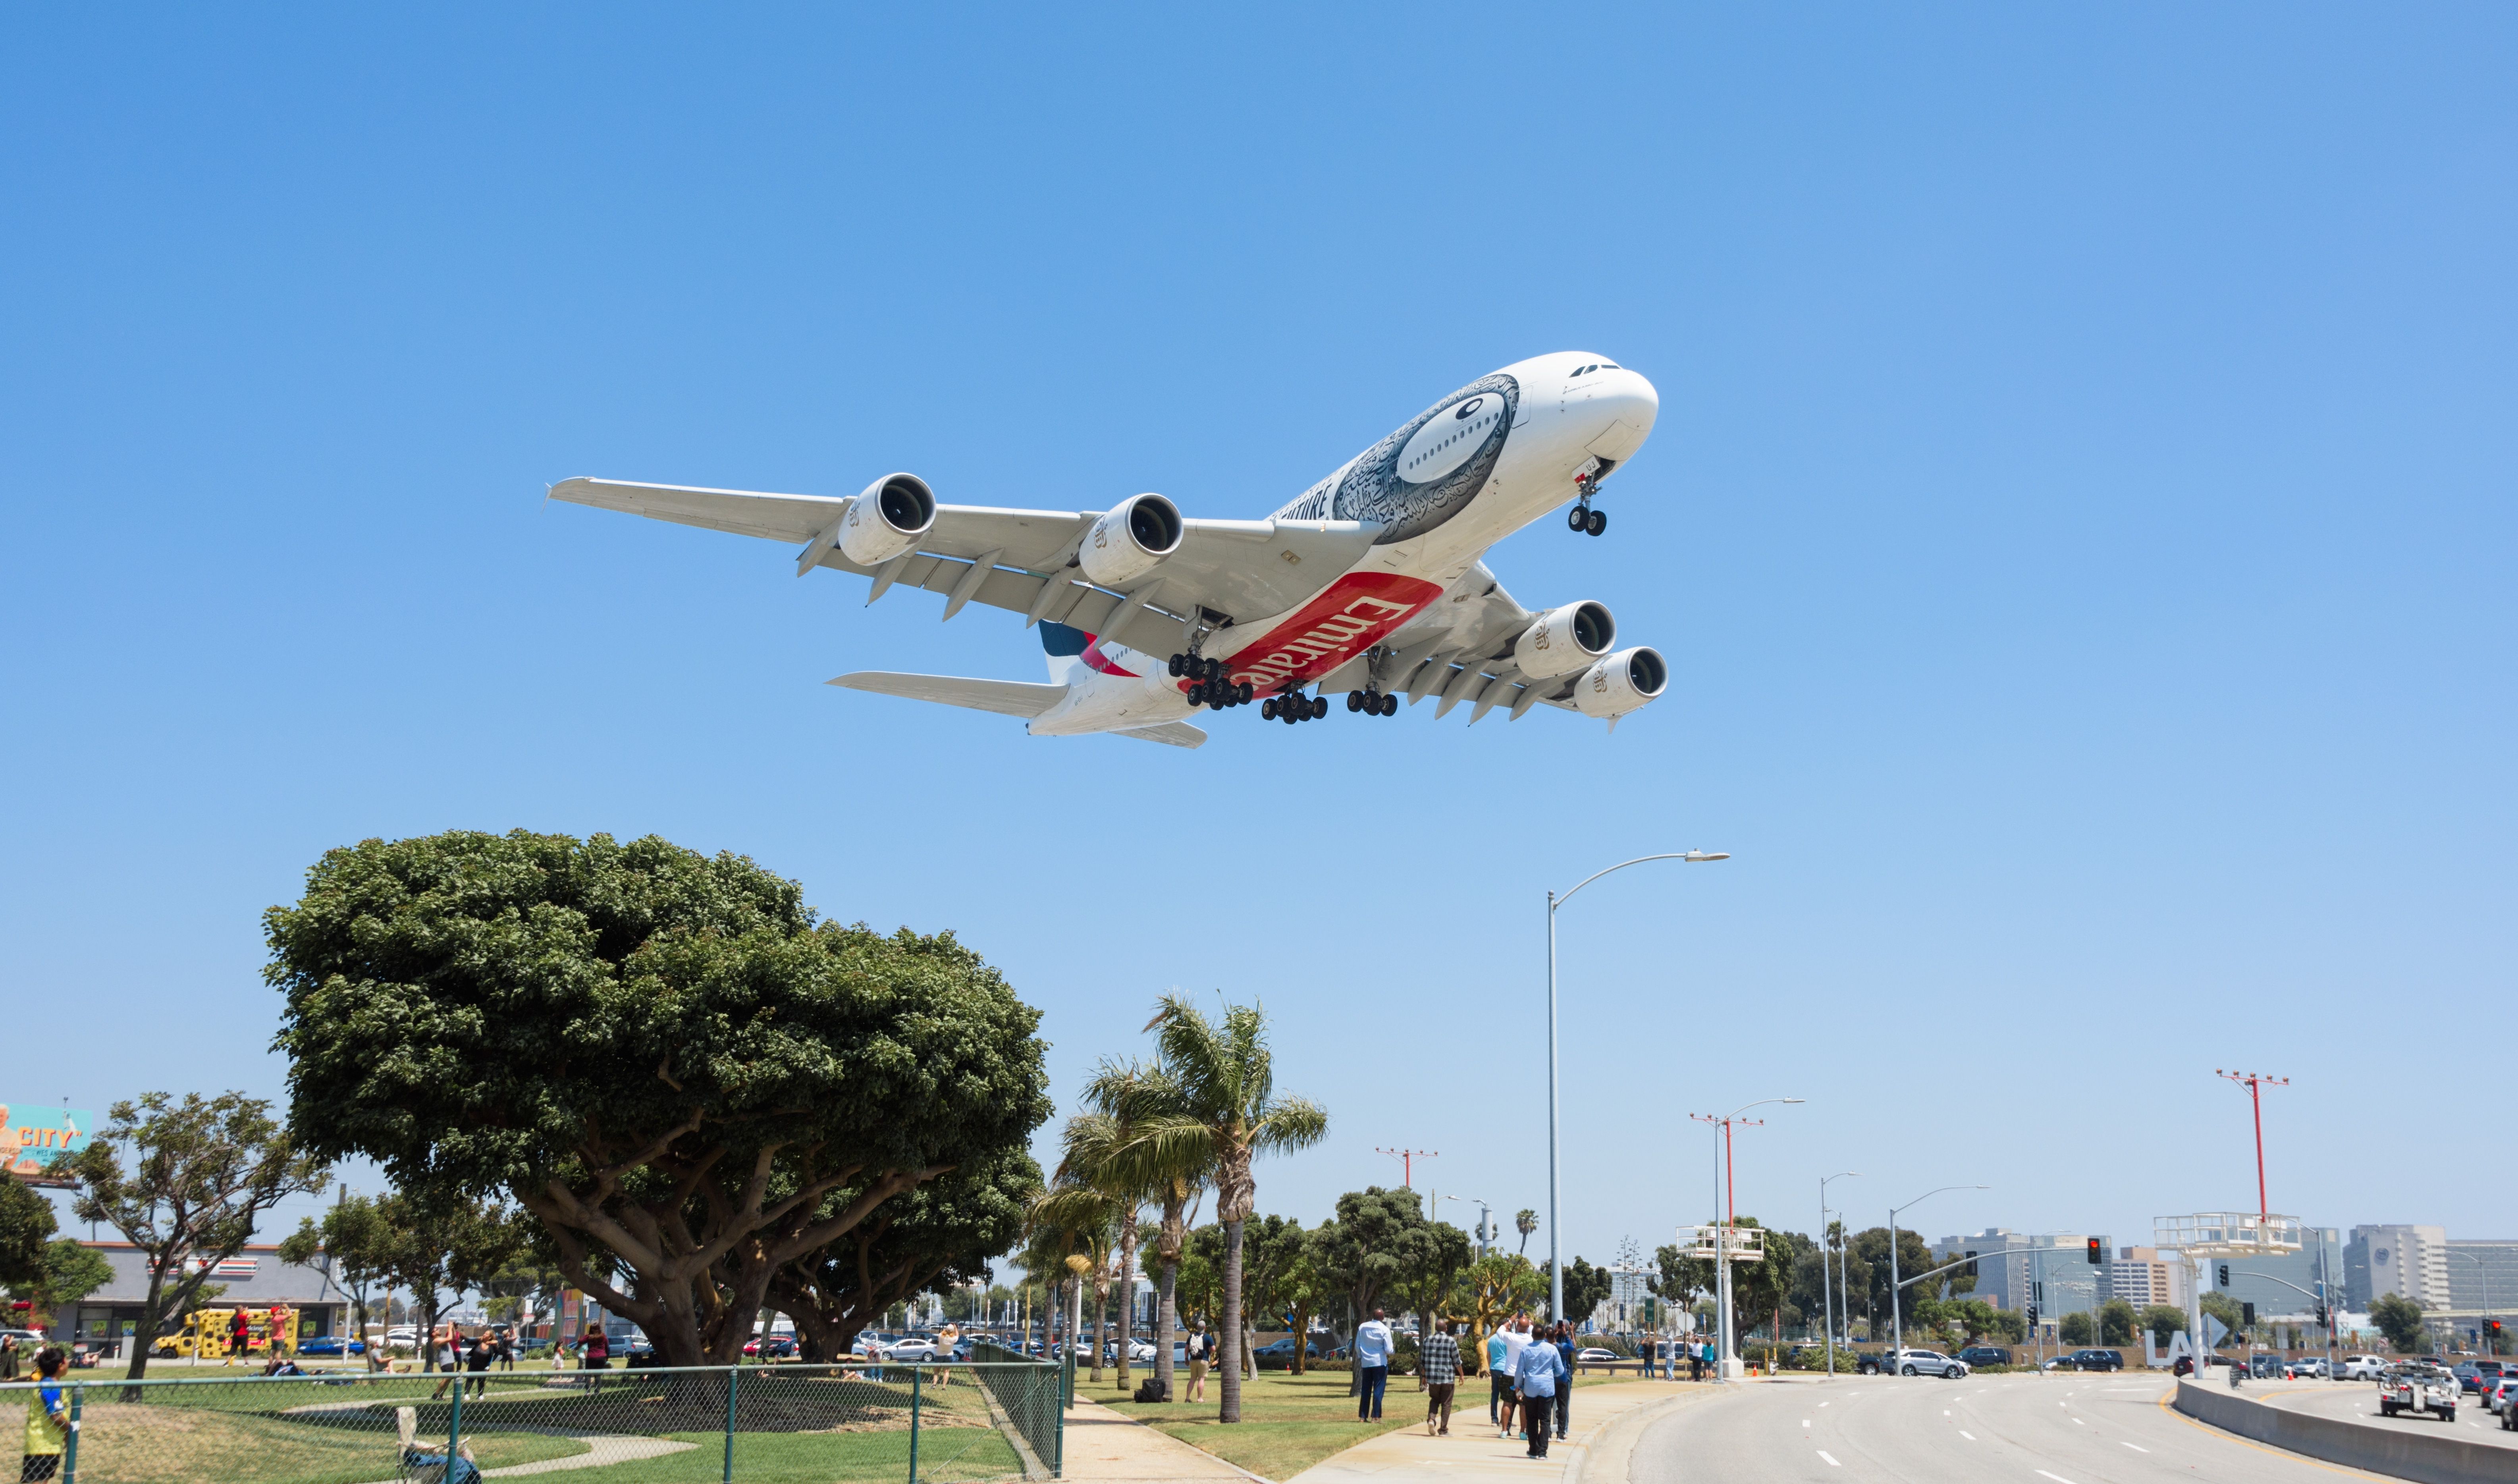 An Emirates landing at LAX Airport.